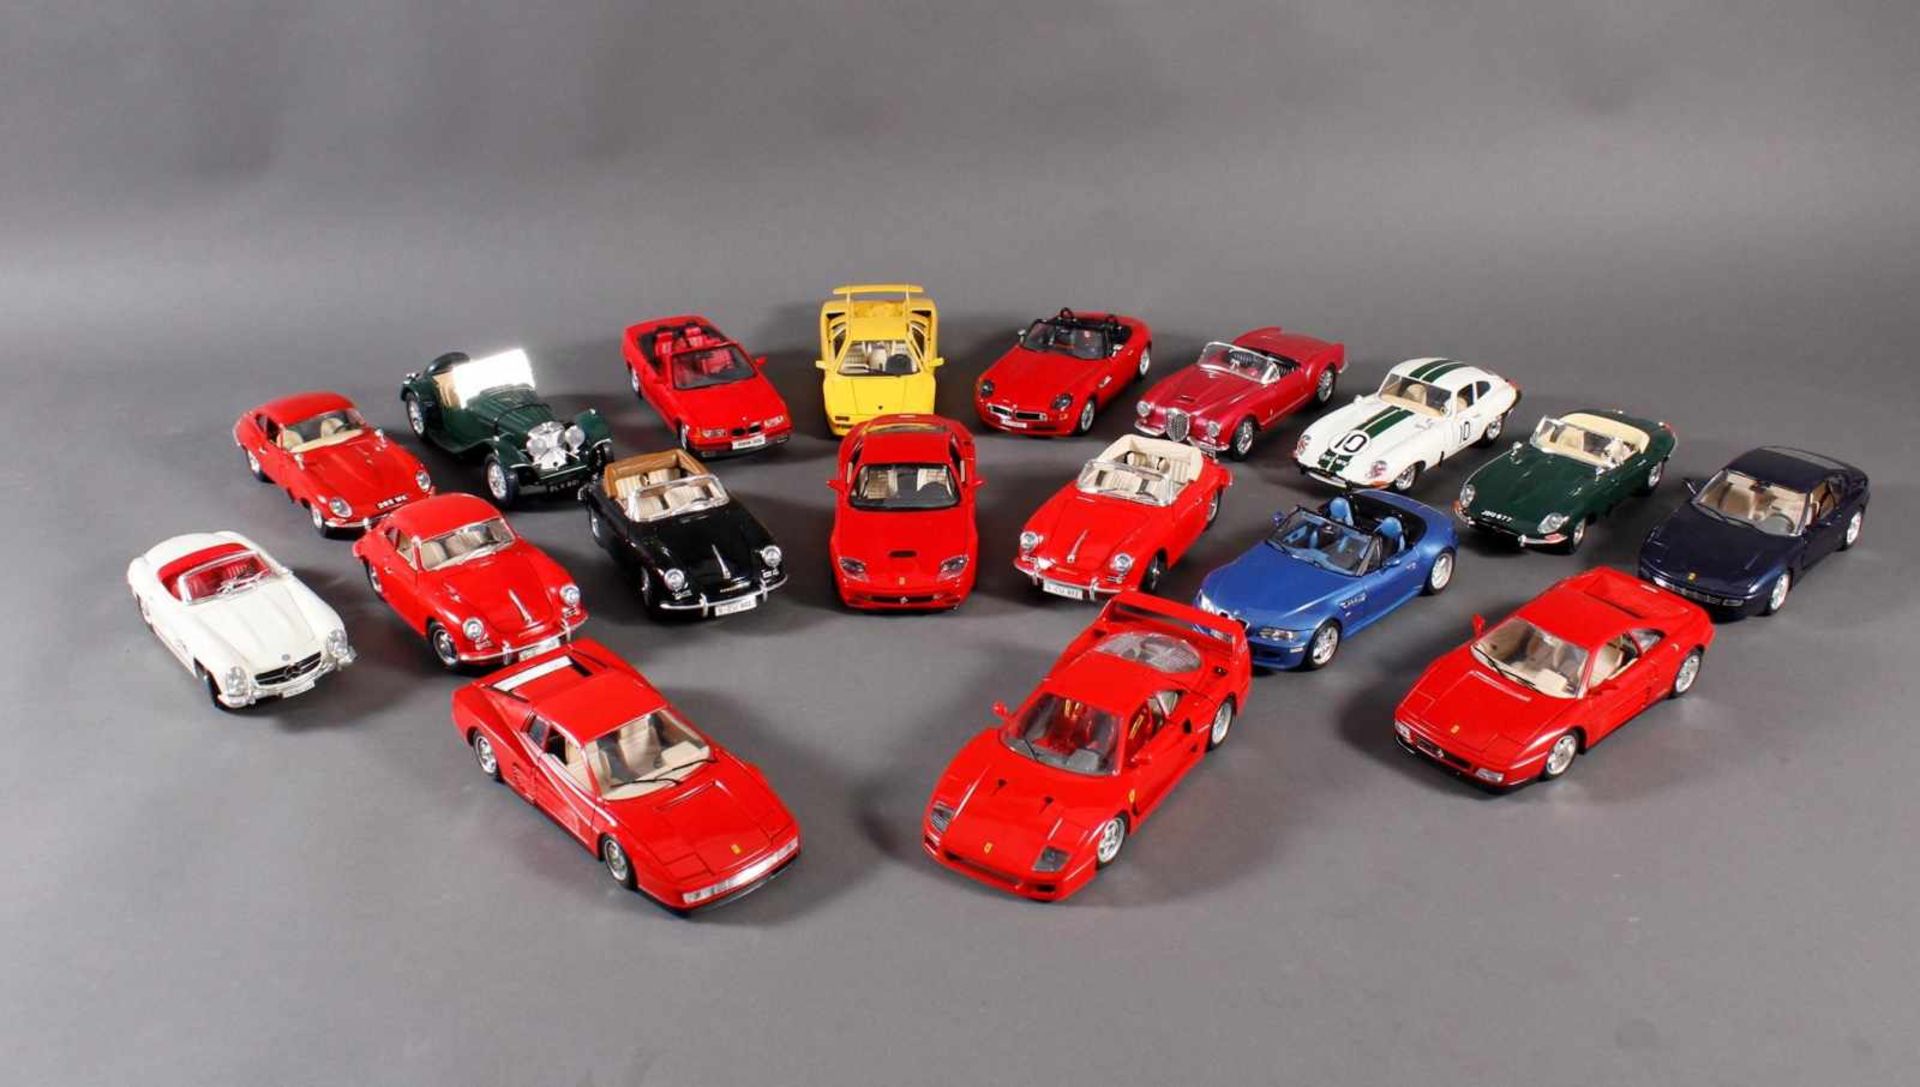 Modellautos Burago 1:1818 Stück. Hersteller Burago. Ferrari: 1x Testarossa (1984), 1x 348 (1989), 1x